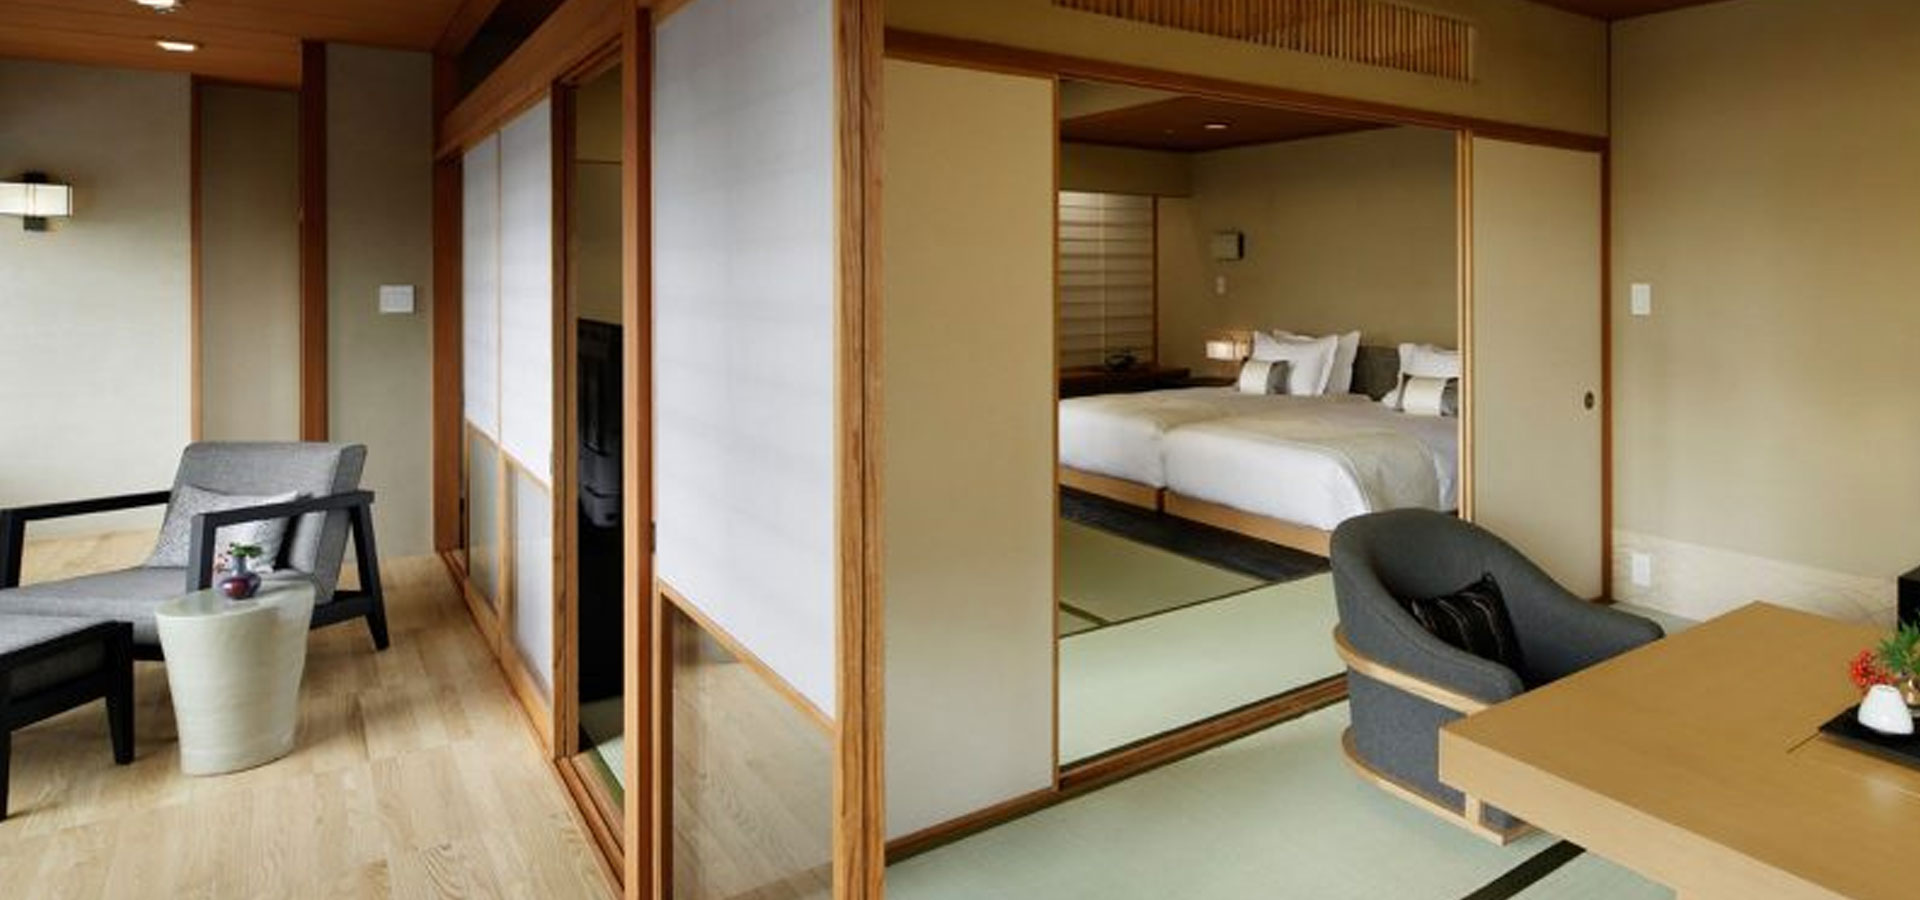 Takanawa Hanakohro – “Ryokan” has been created with a total of 16 rooms